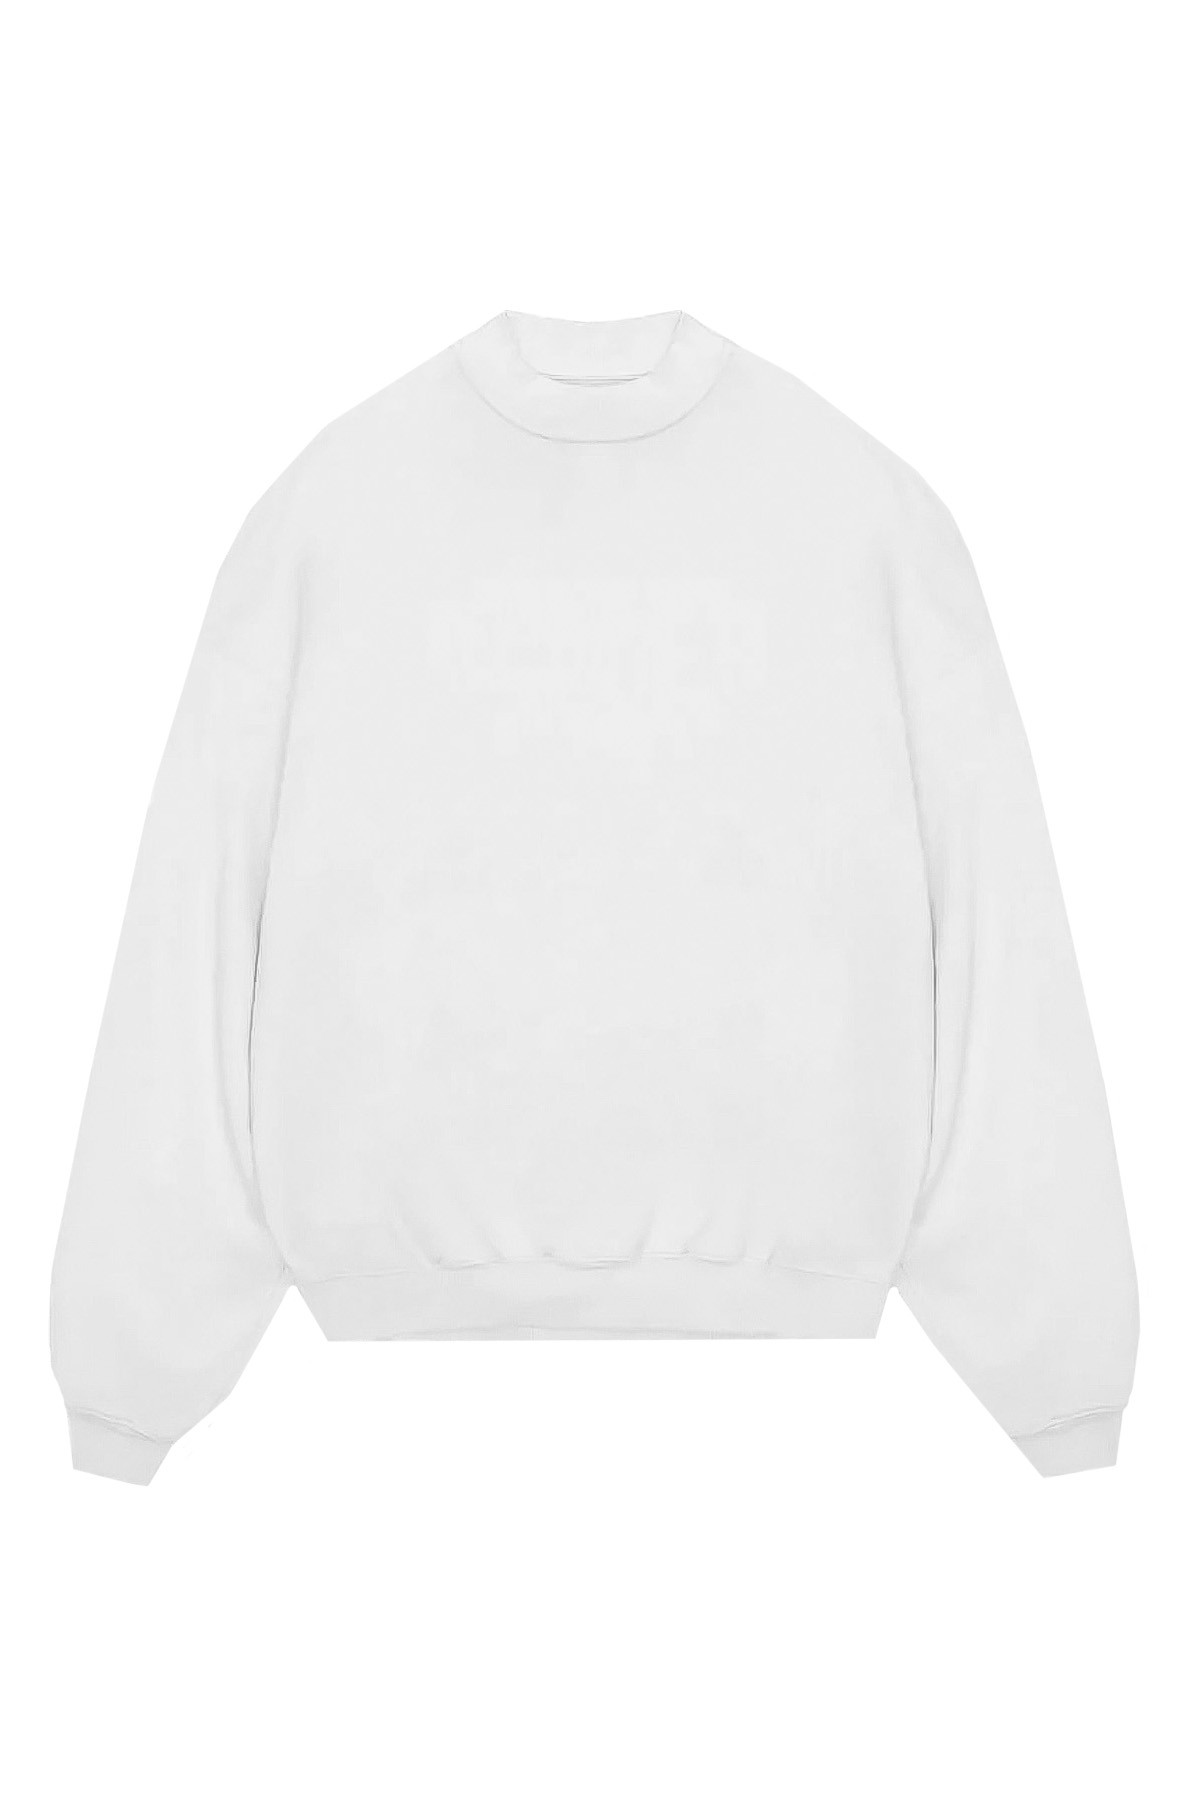 Jeu - Oversize Sweatshirt - WHITE